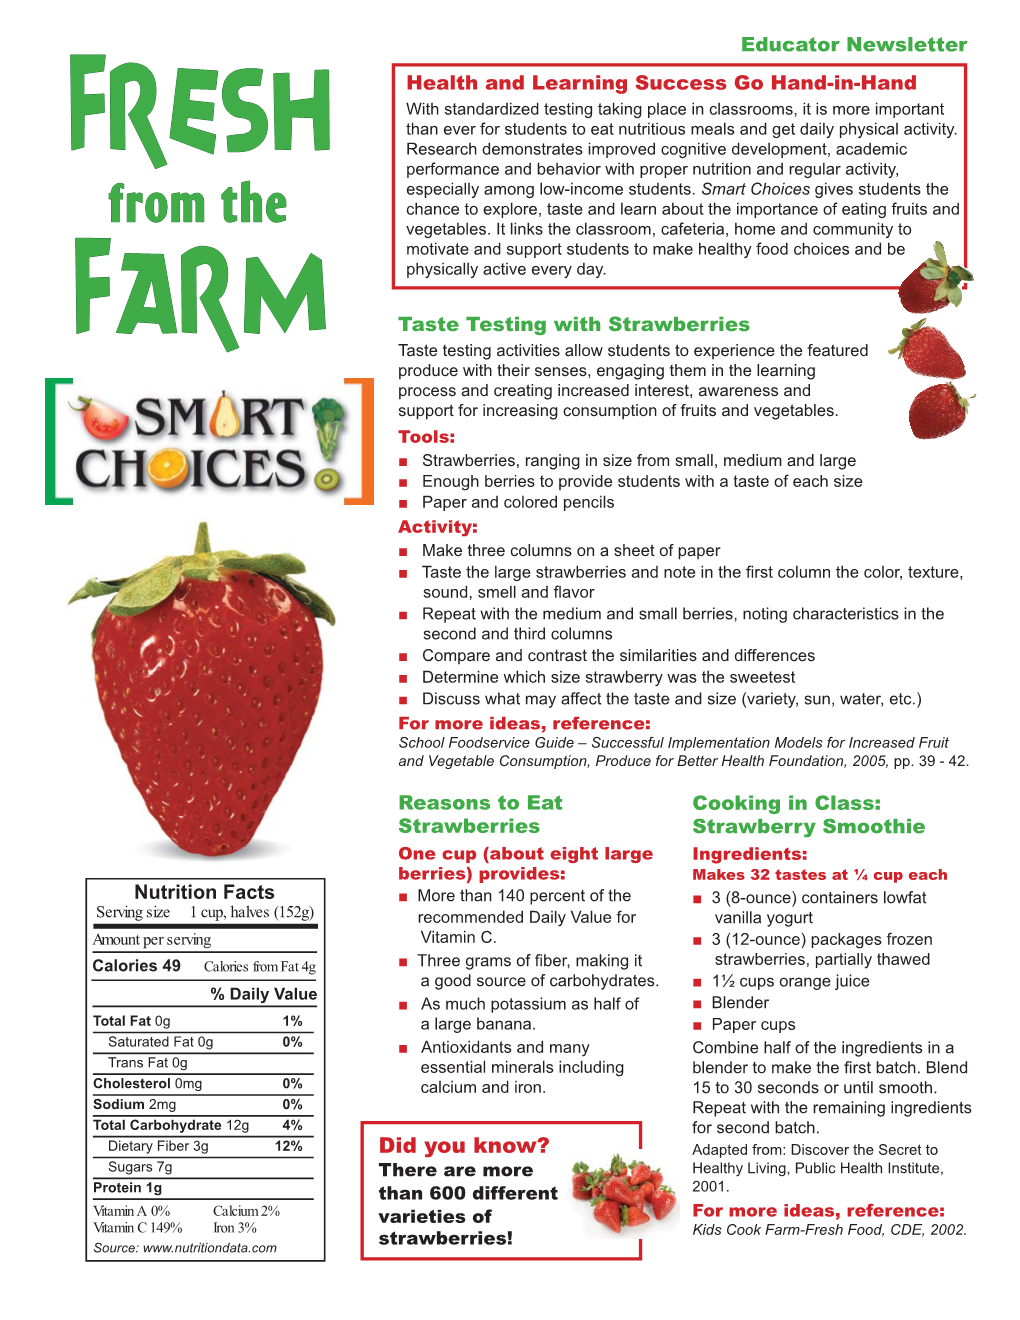 Strawberry Educator Newsletter.Indd